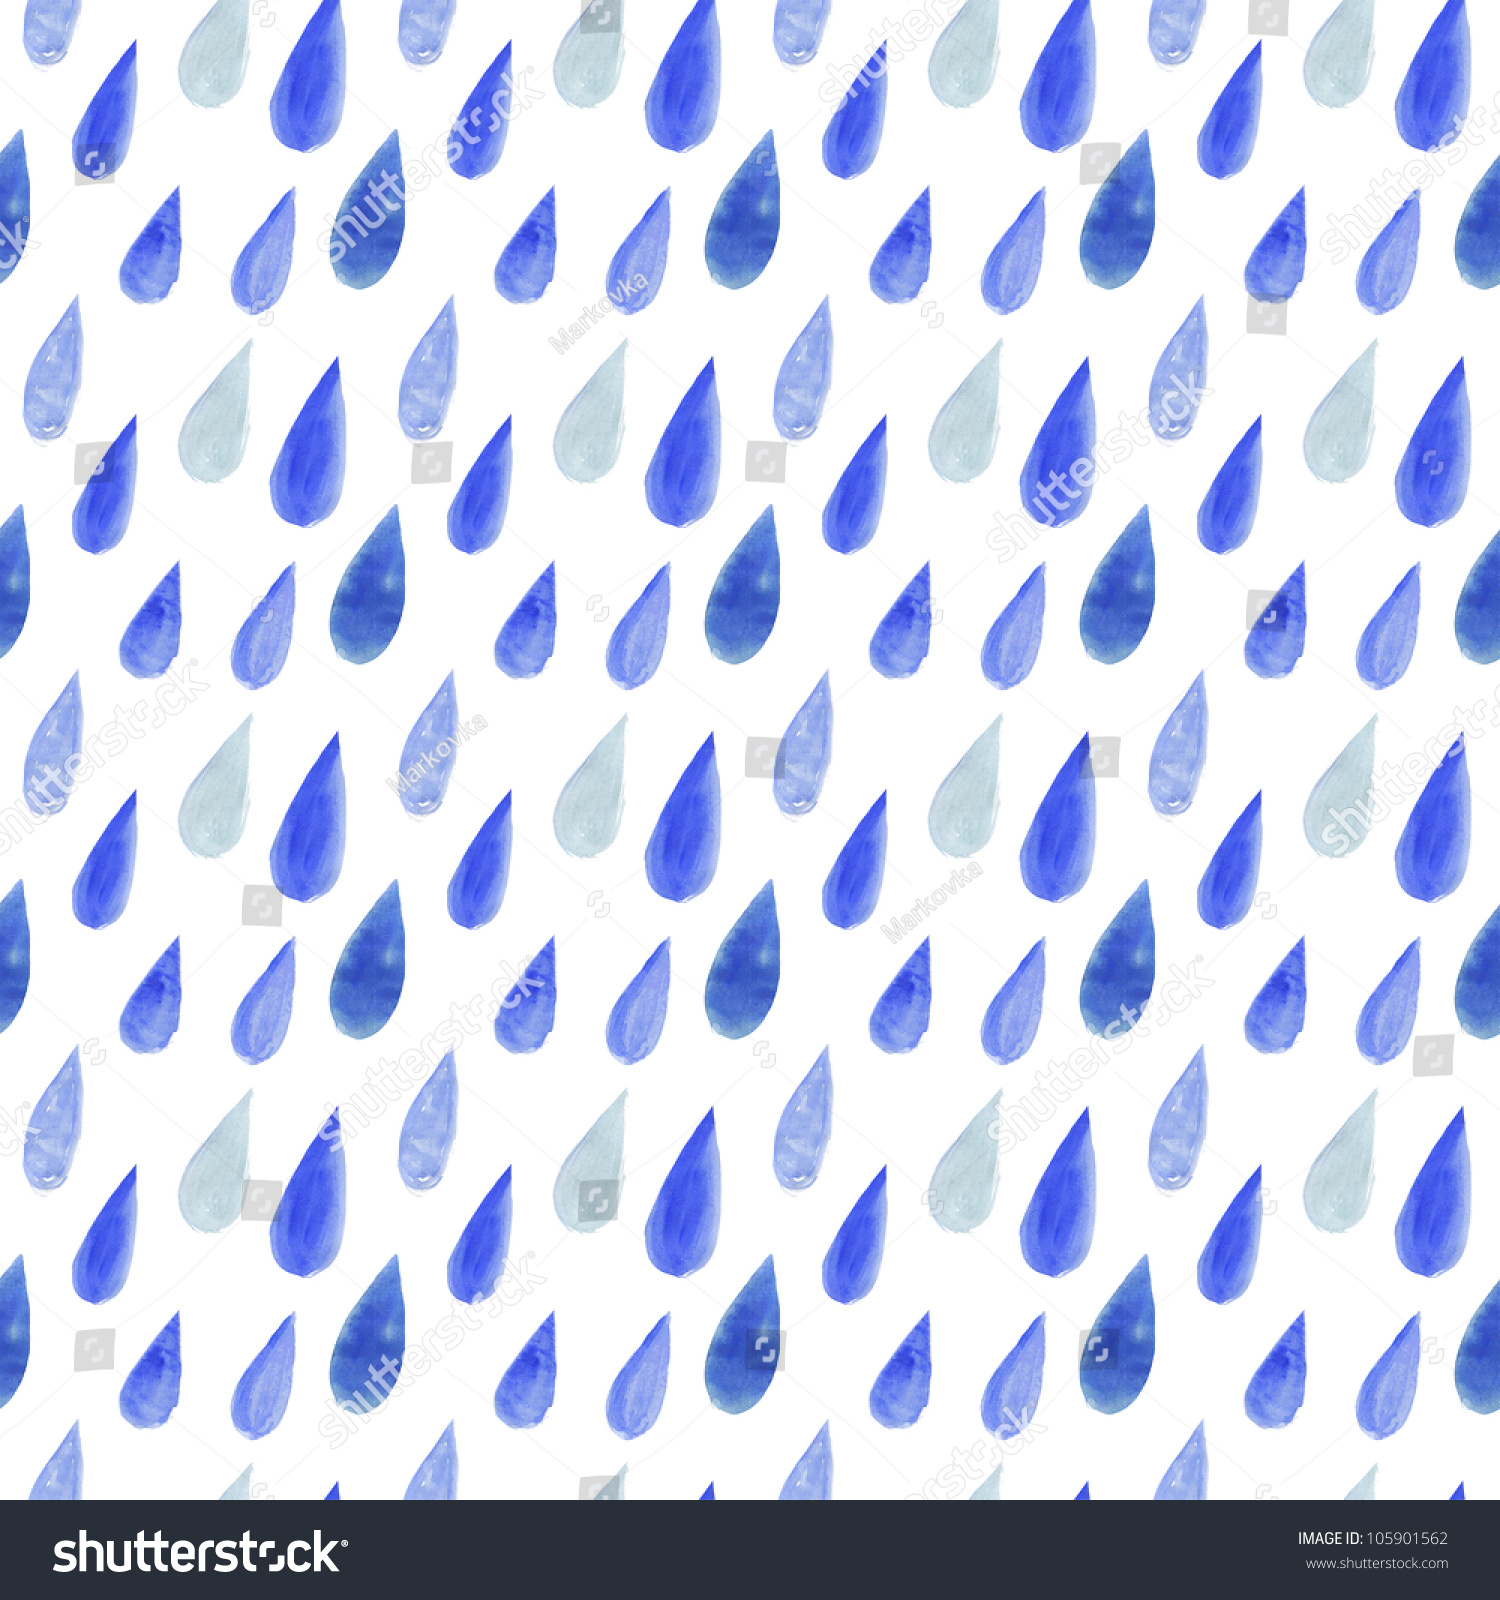 Watercolor Rain Drops Seamless Background Stylized Stock Illustration ...